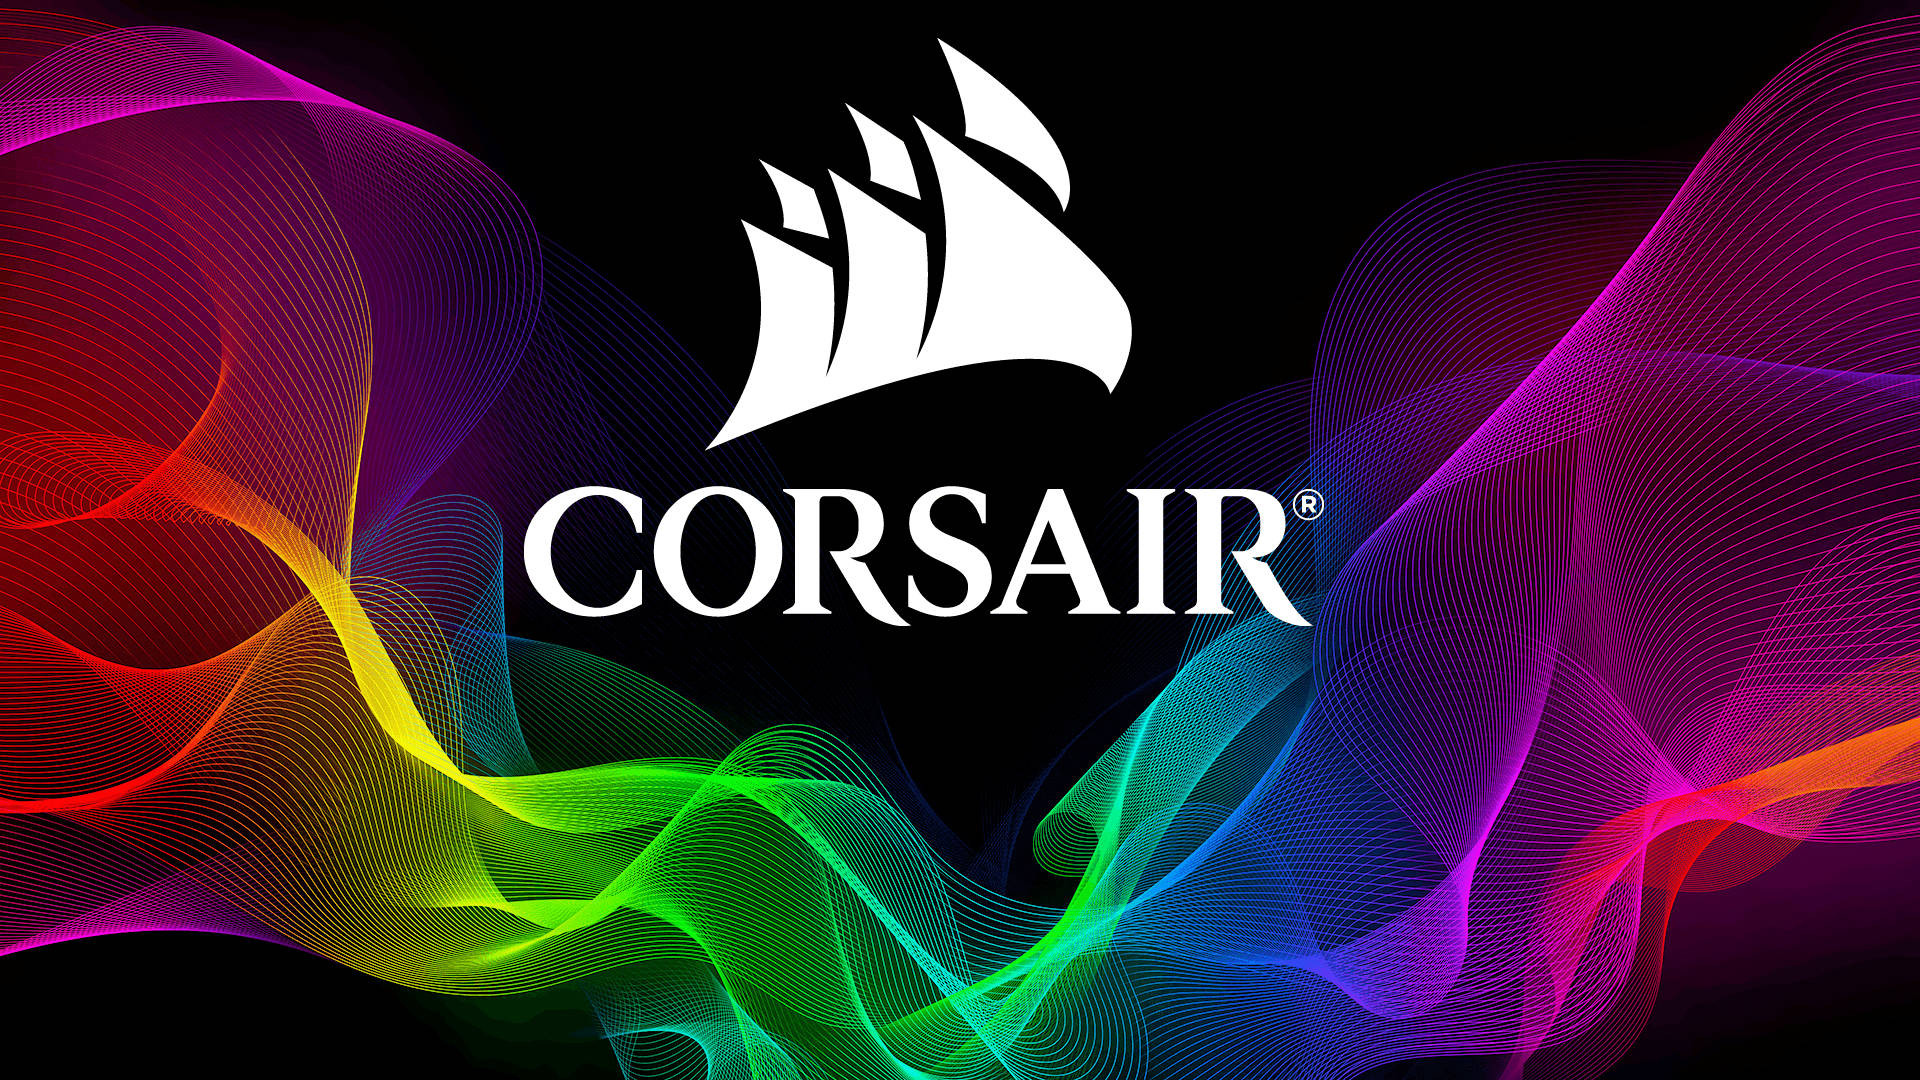 Corsair logo waves with vibrant RGB colors Wallpaper